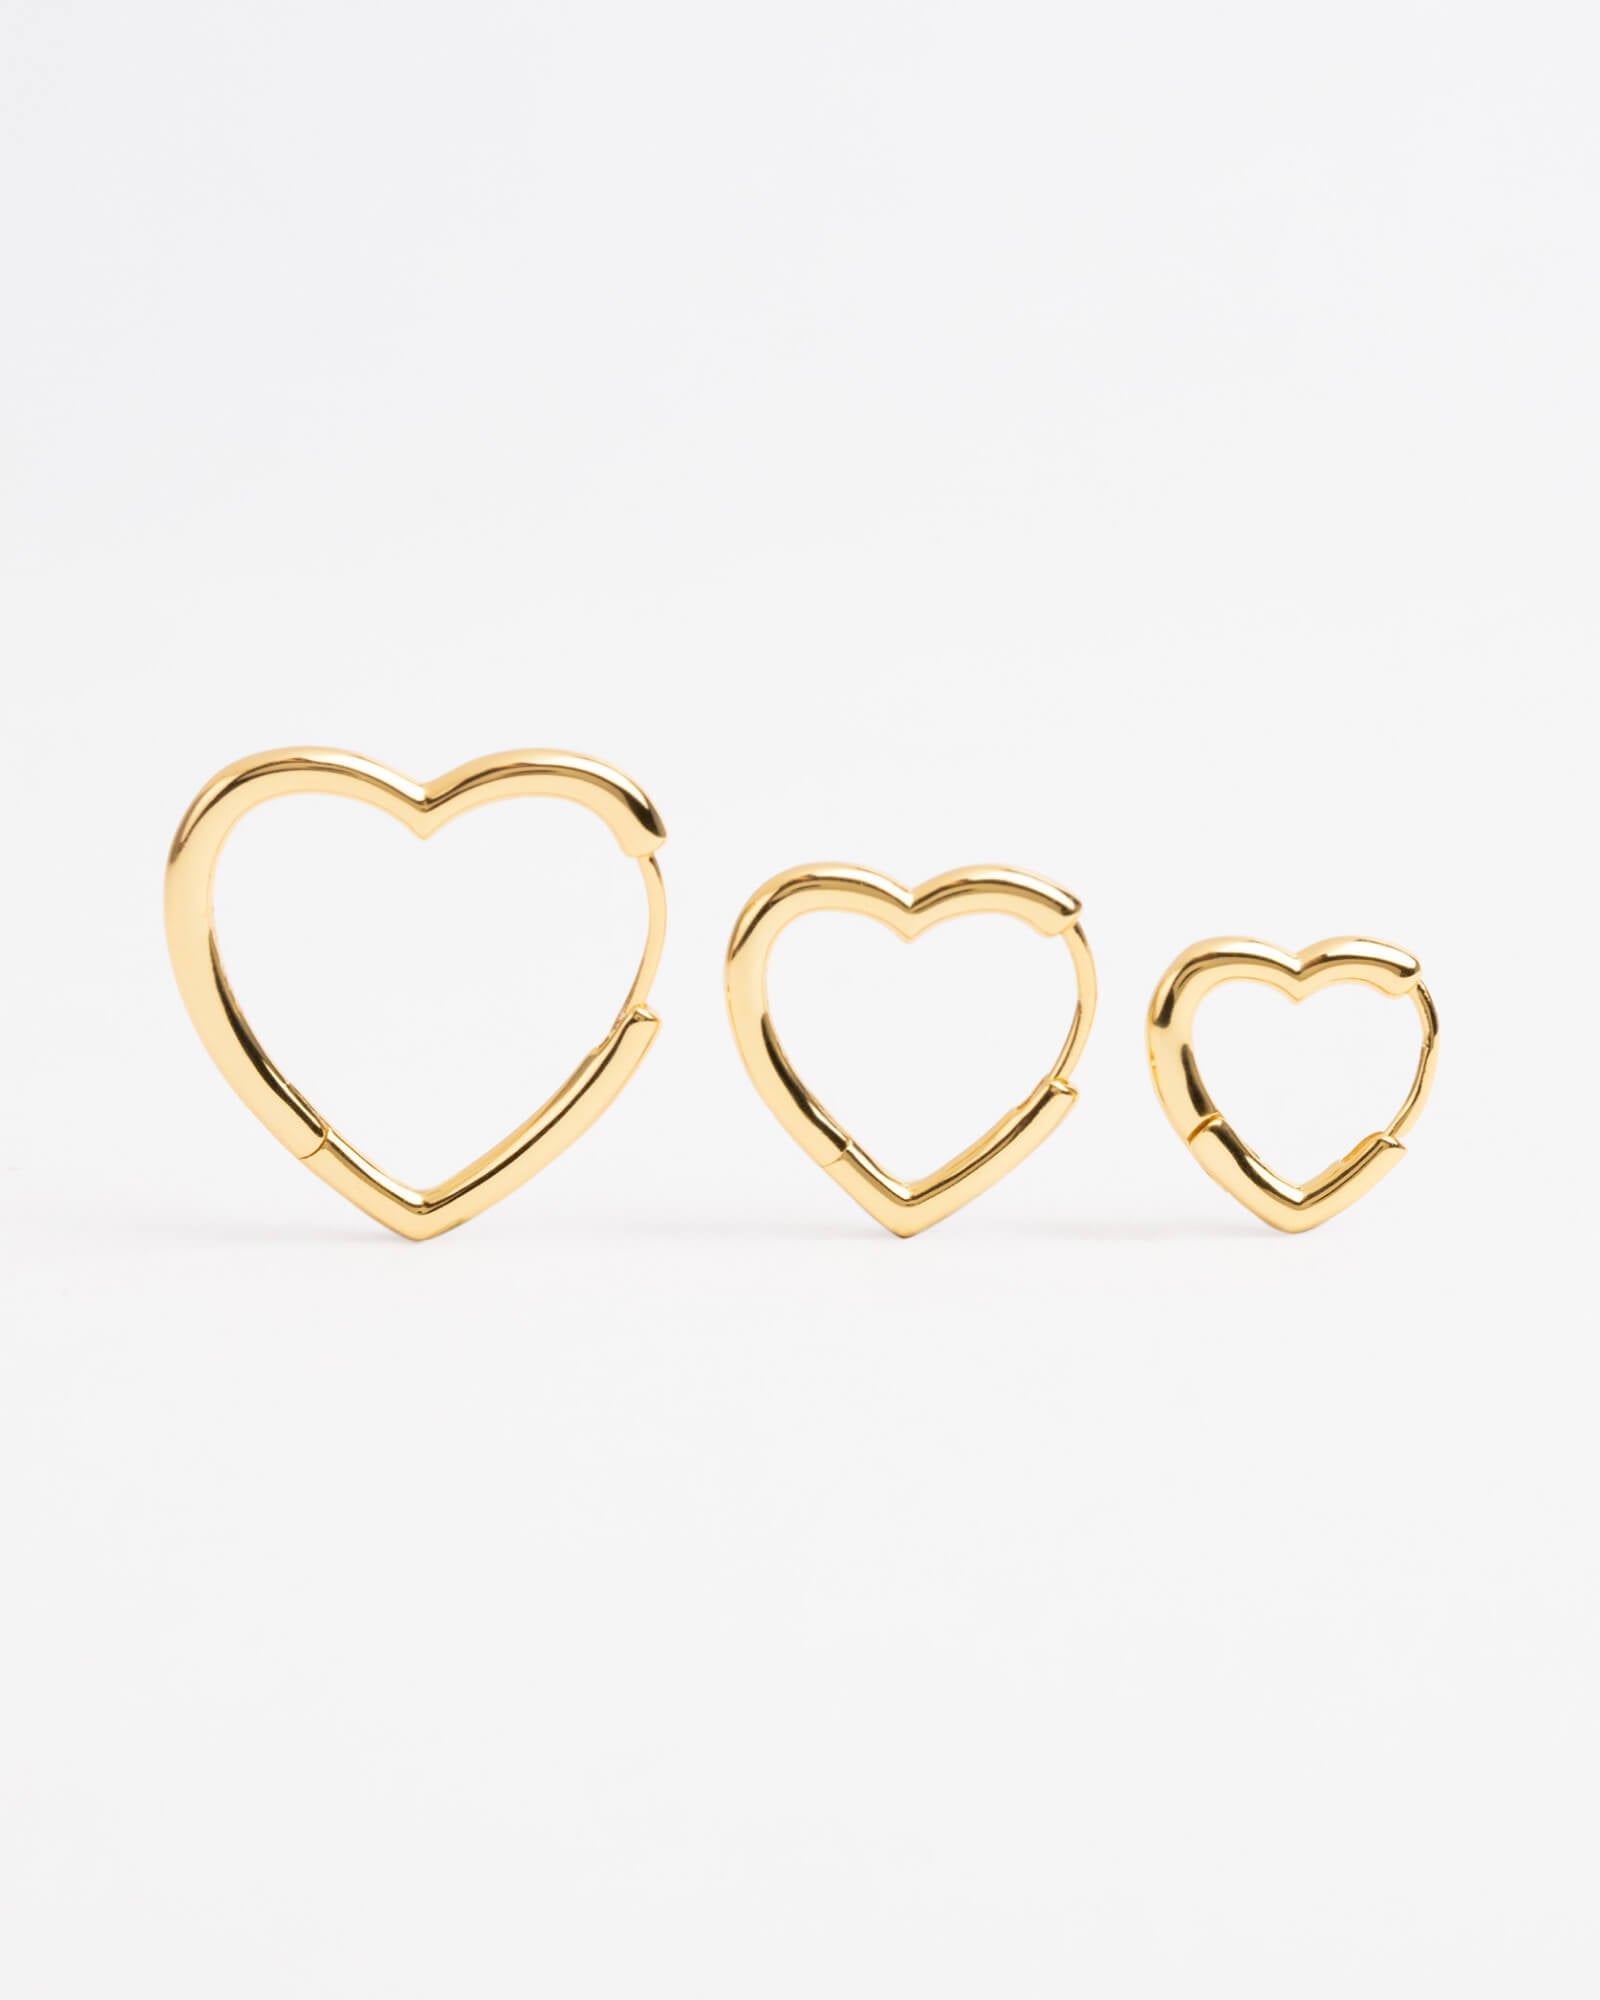 Hallow Heart Earrings | Earrings | Dangle Earrings – Ask and Embla